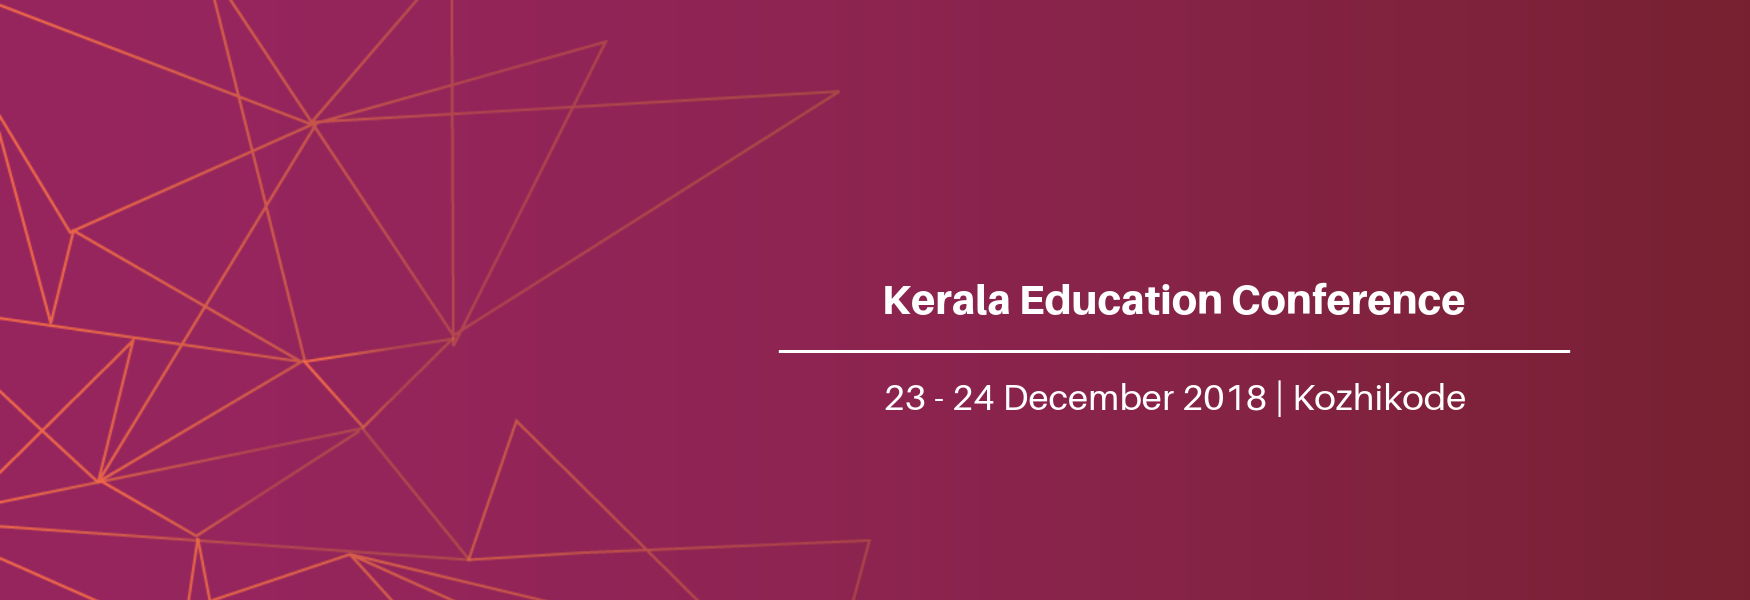 Kerala Education Conference